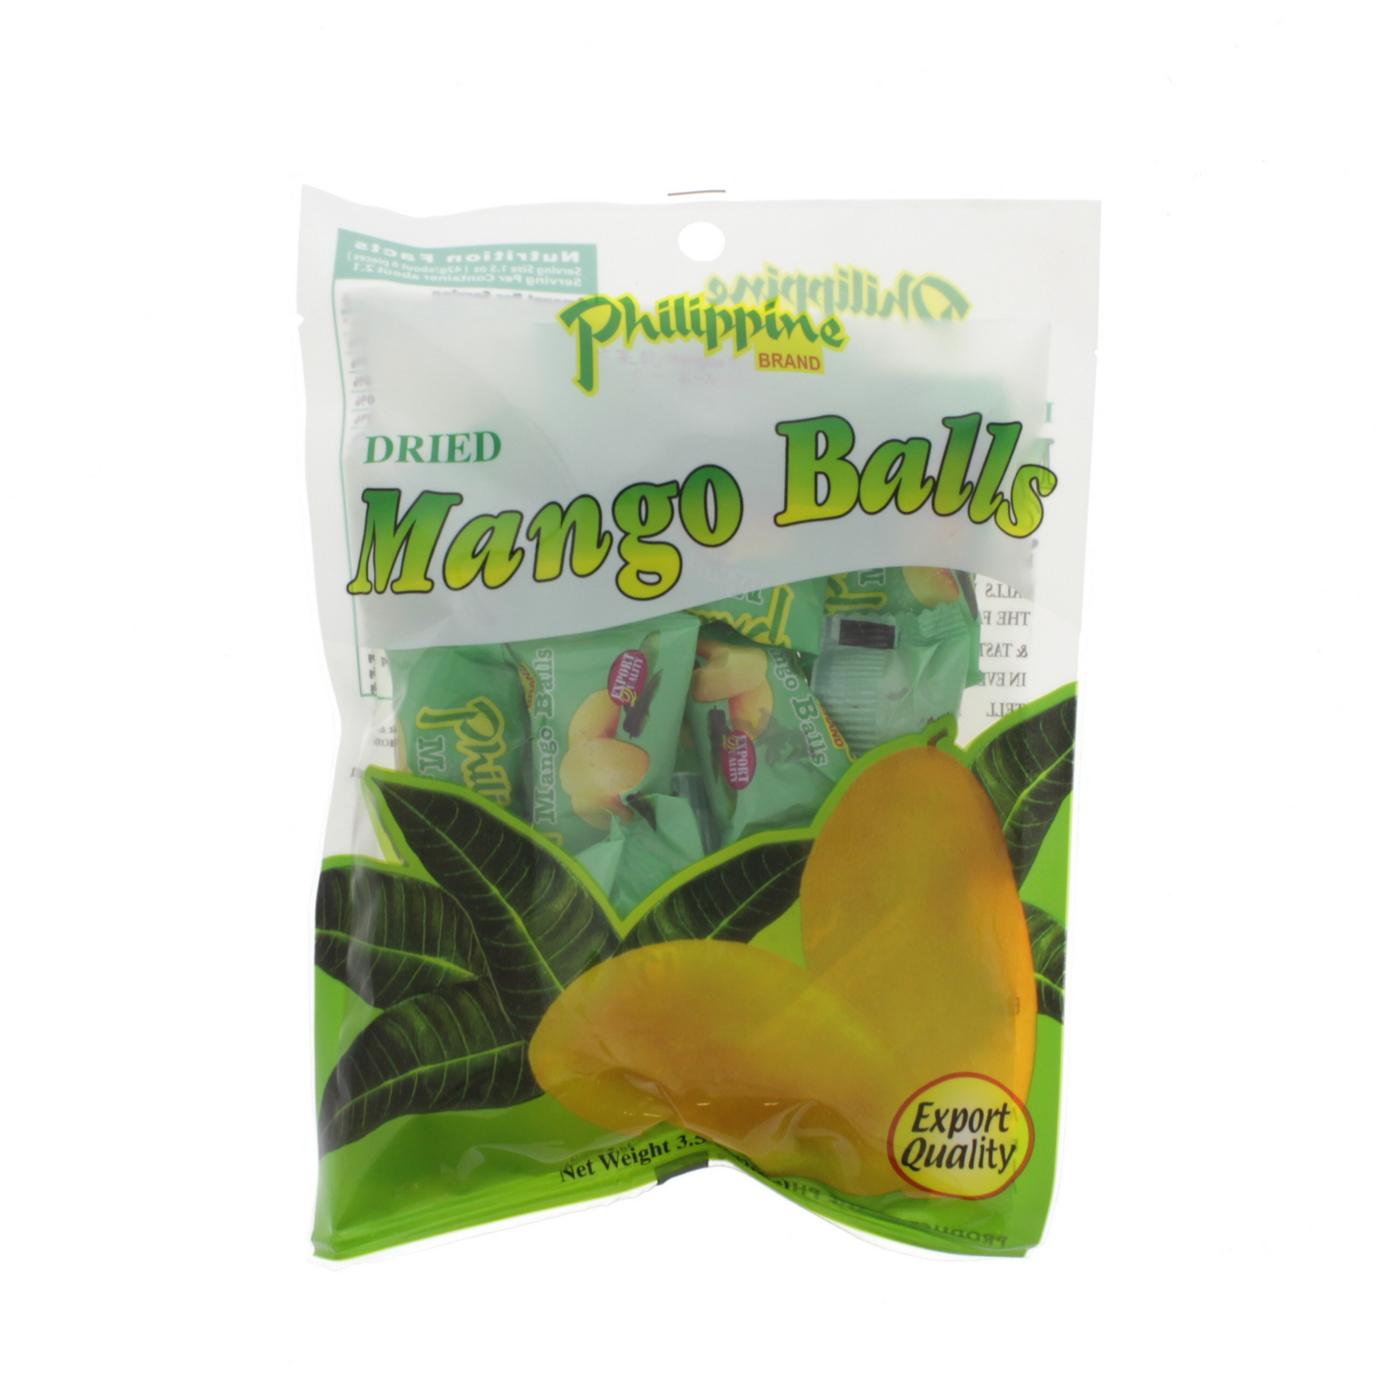 Philippine Dried Mango Balls; image 1 of 2